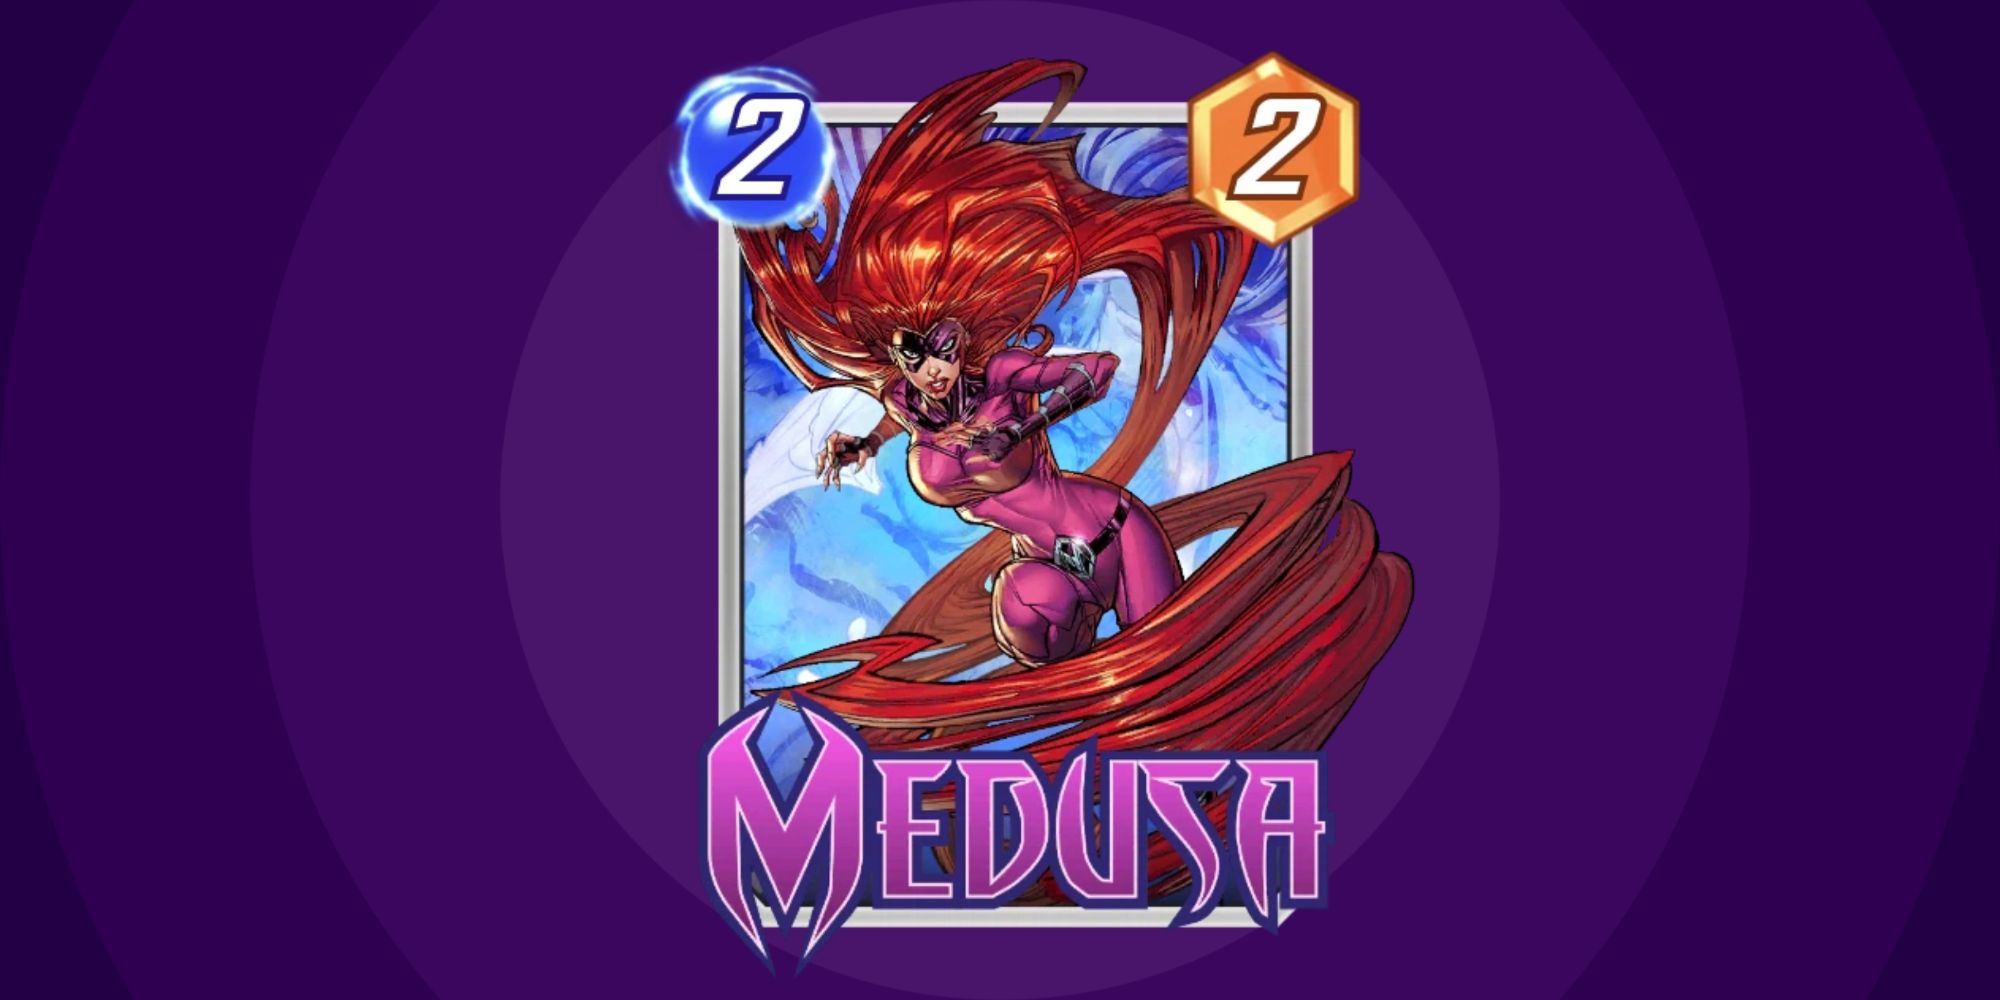 medusa's card in marvel snap